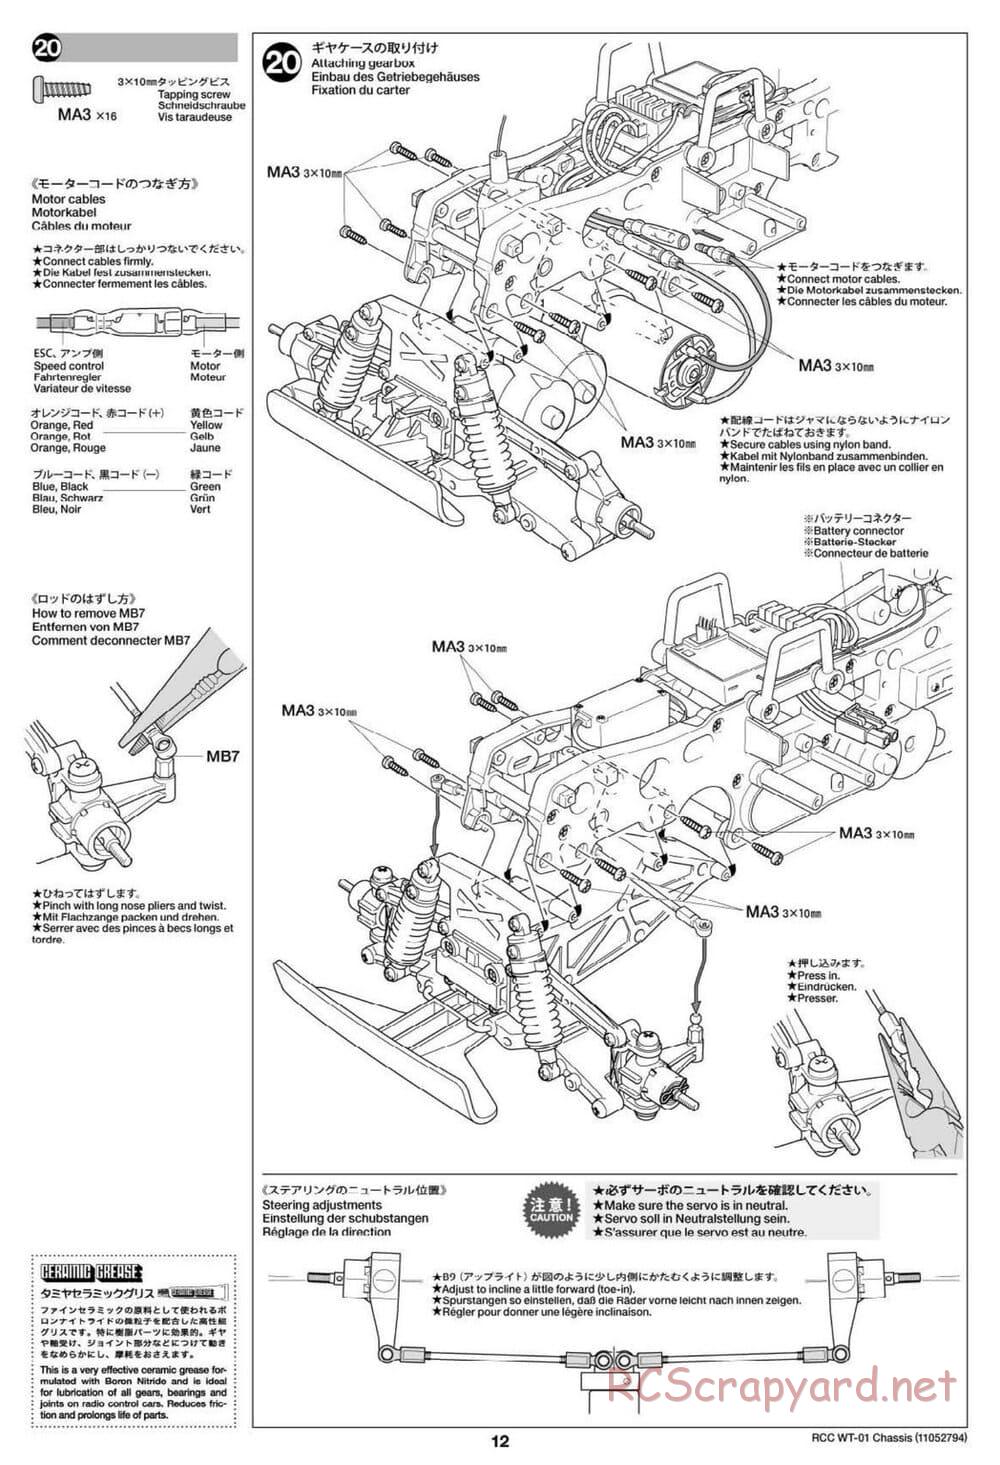 Tamiya - Mud Blaster II - WT-01 Chassis - Manual - Page 12